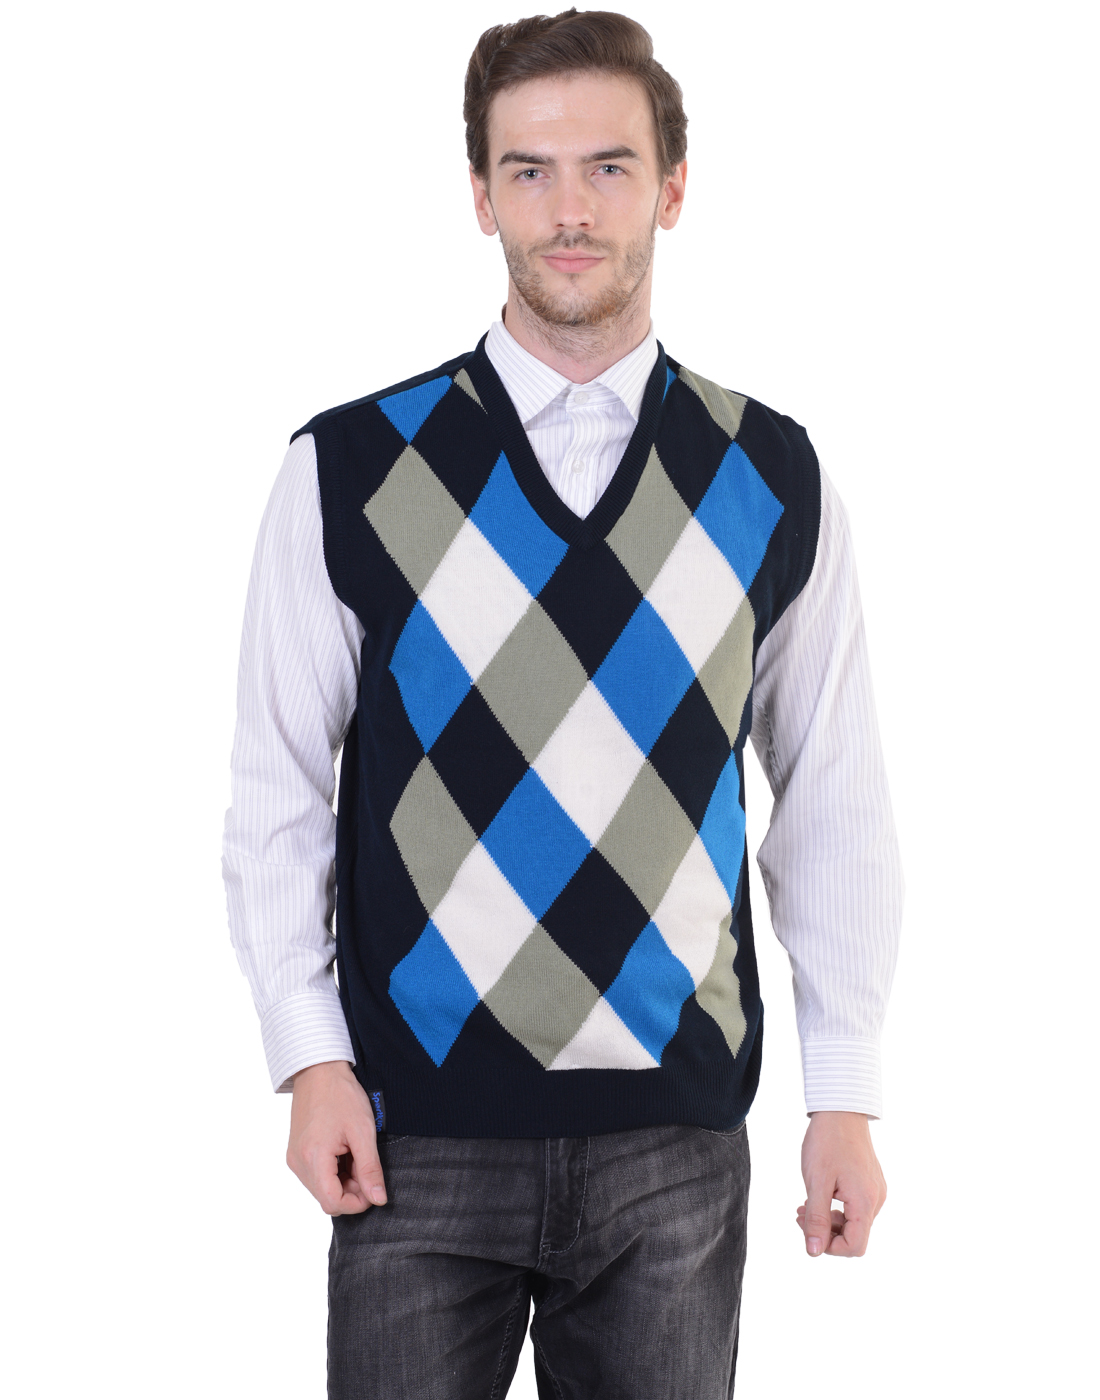 Buy Sportking Navy Color Sweater For Men Online- Shopclues.com